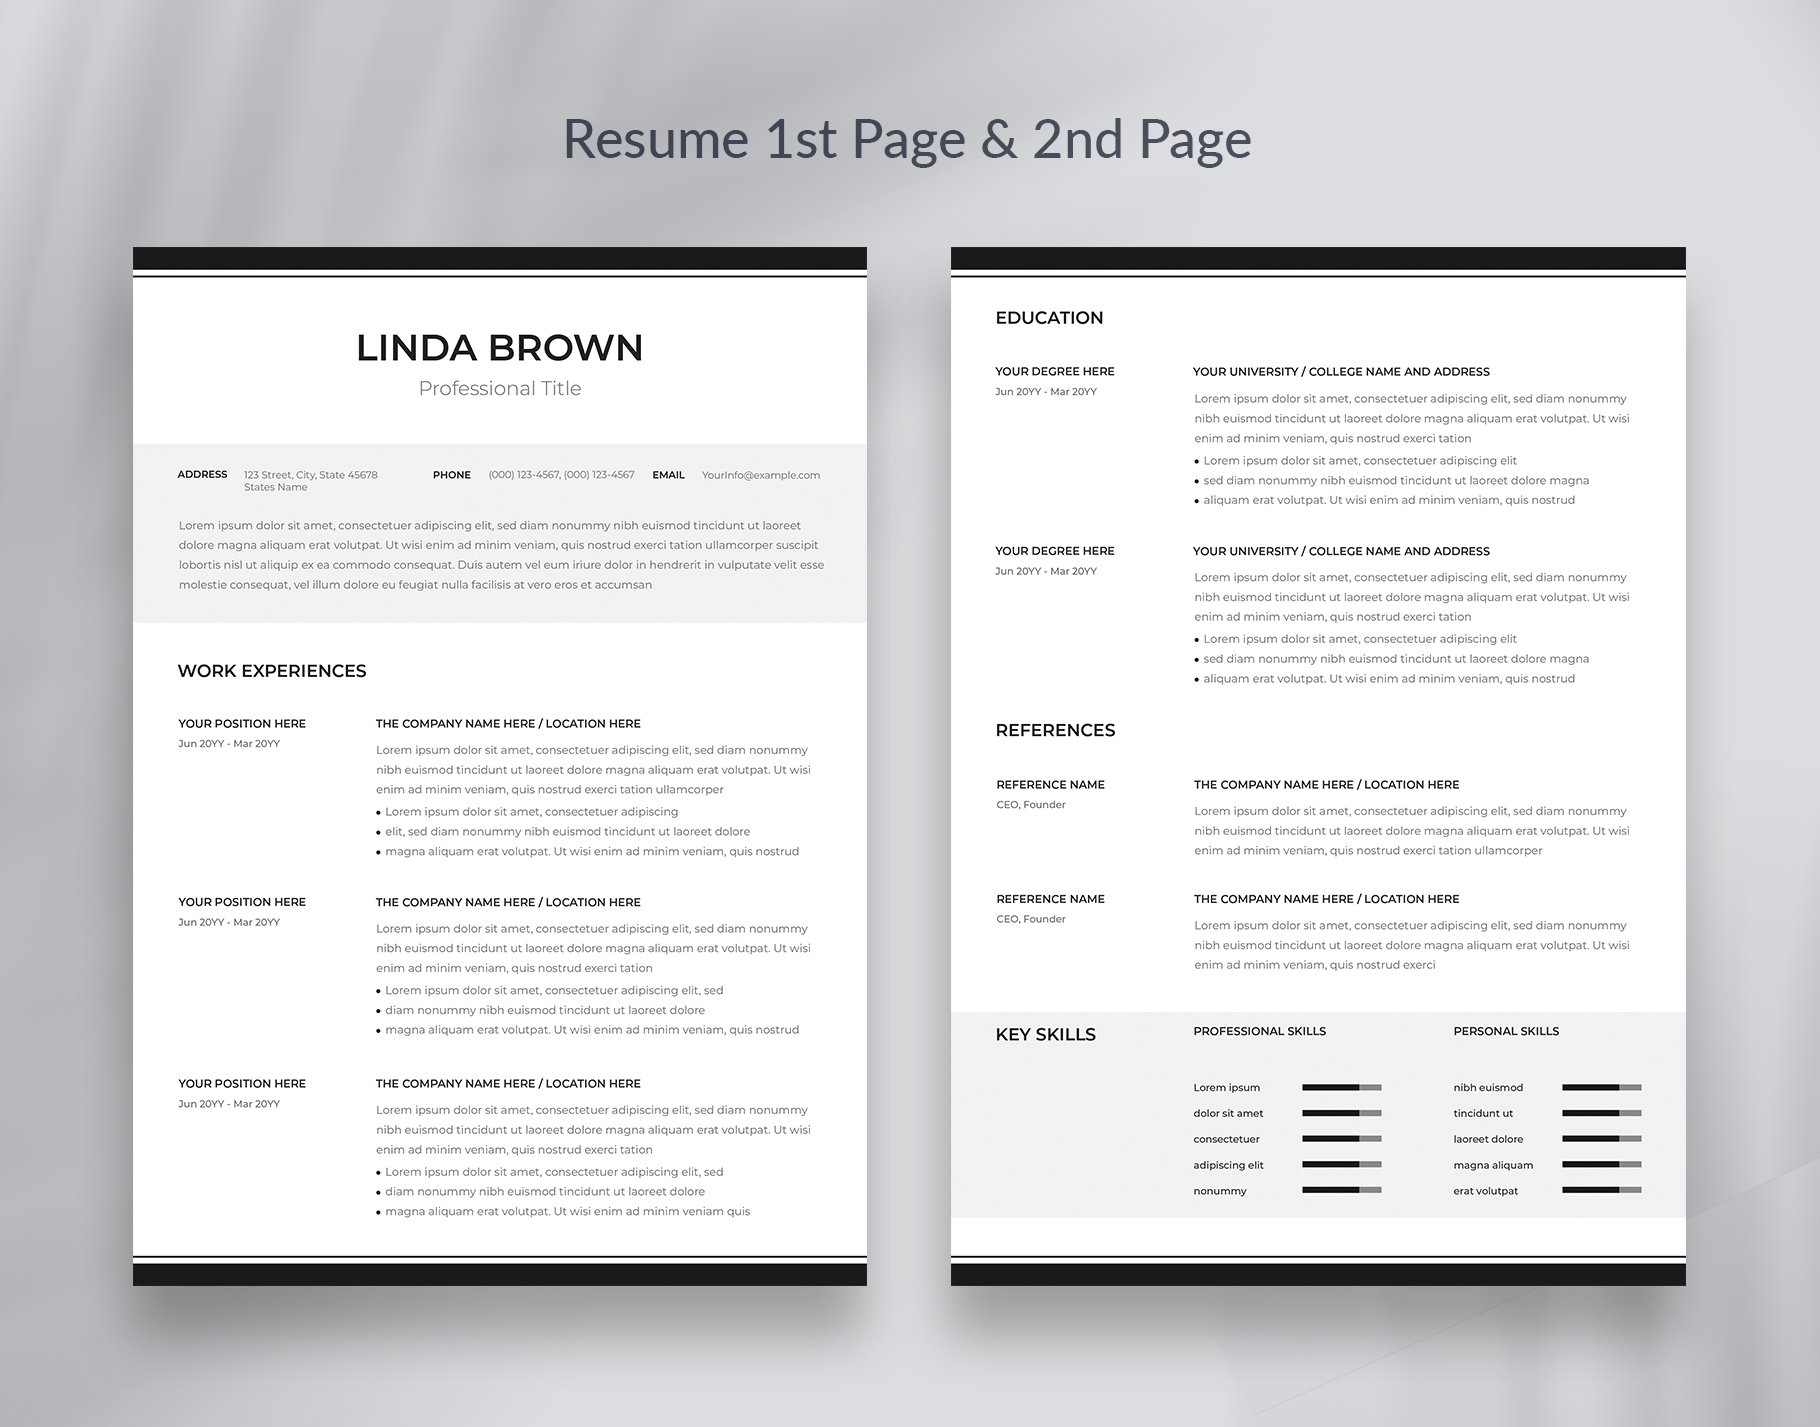 Executive Resume Template / CV preview image.